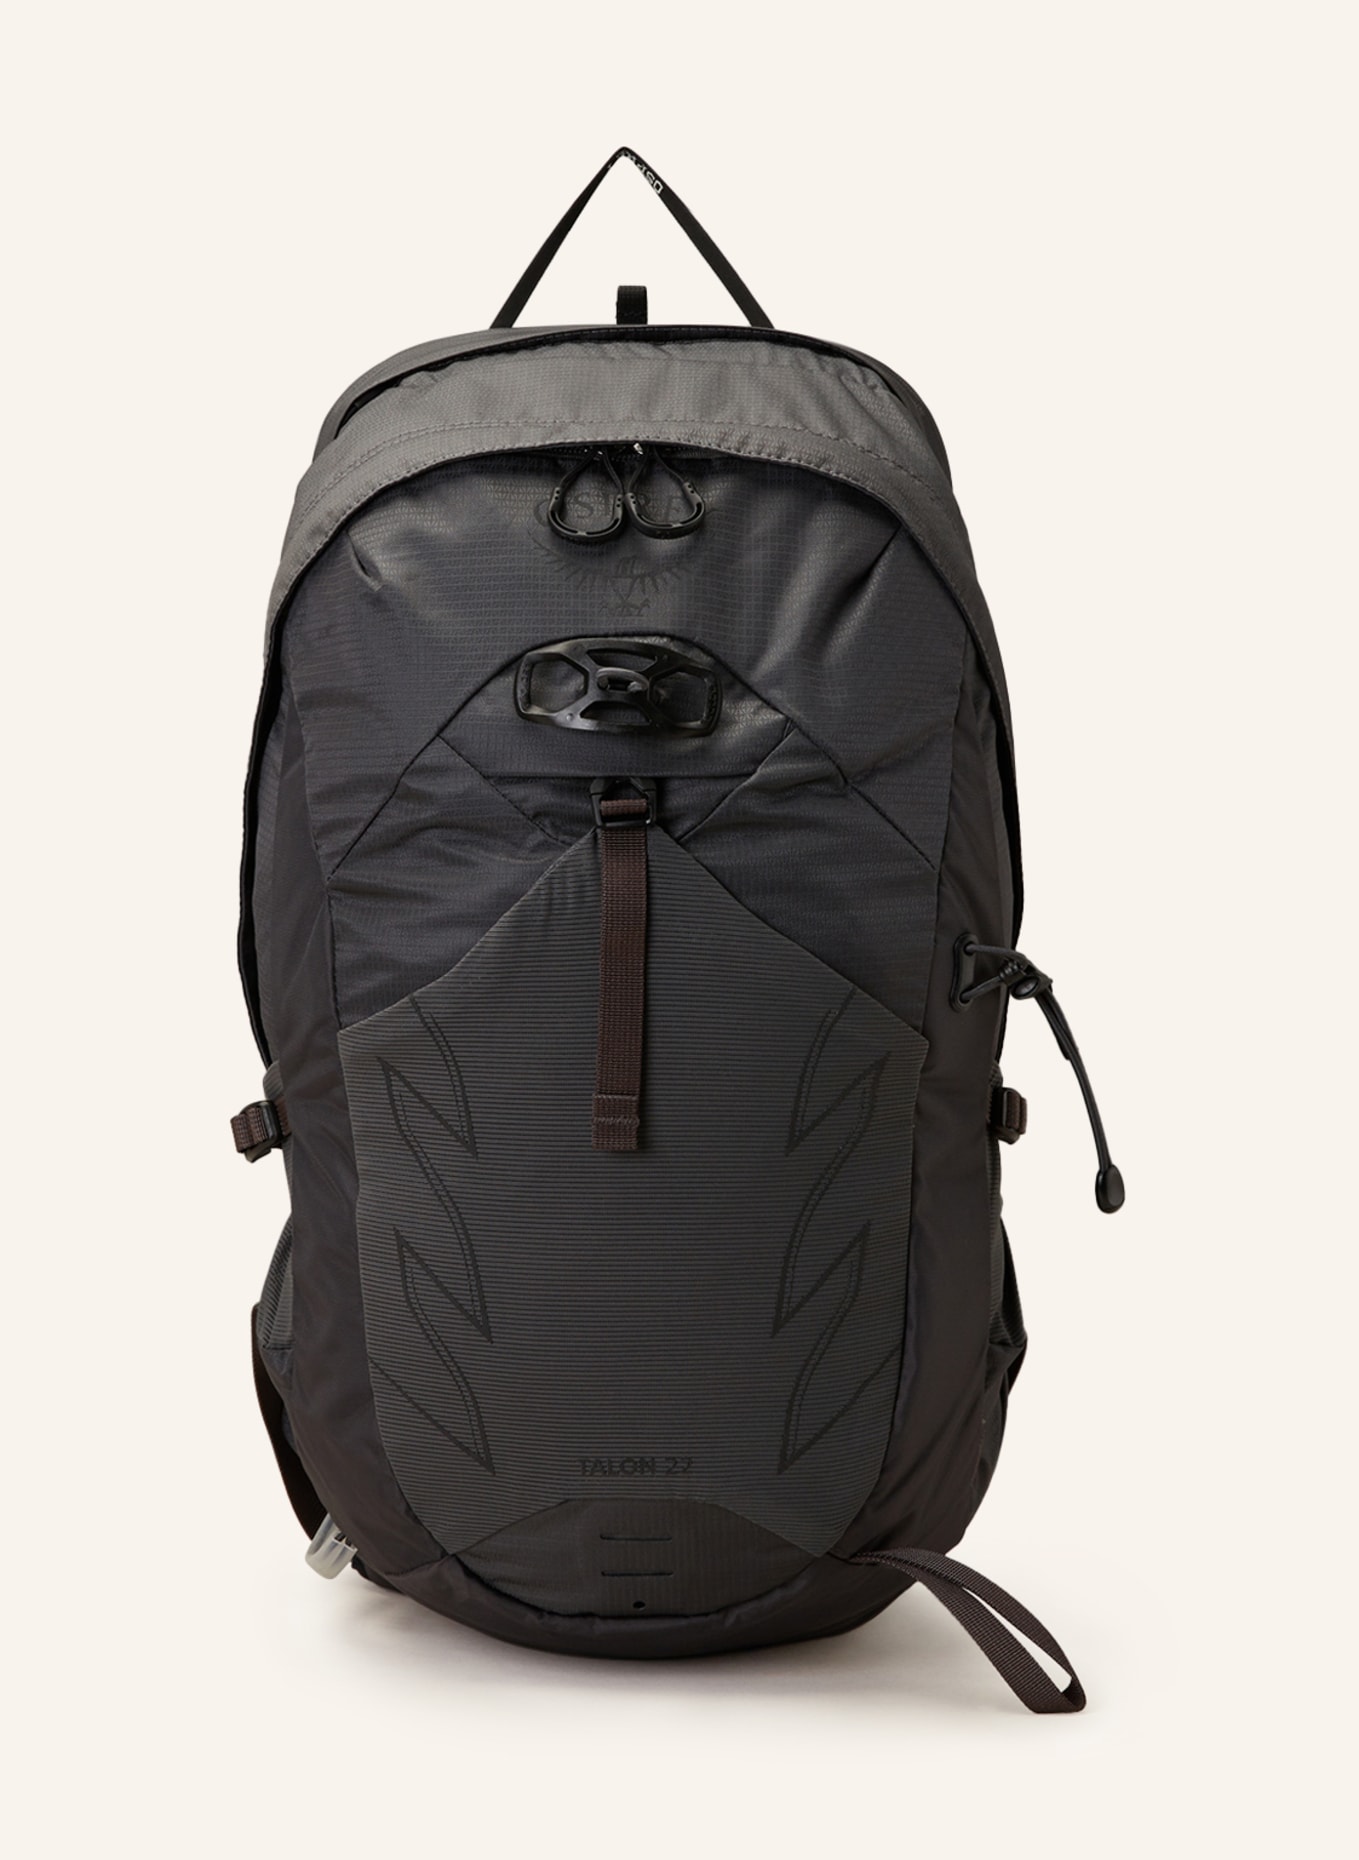 OSPREY Backpack TALON 22 l, Color: DARK GRAY (Image 1)